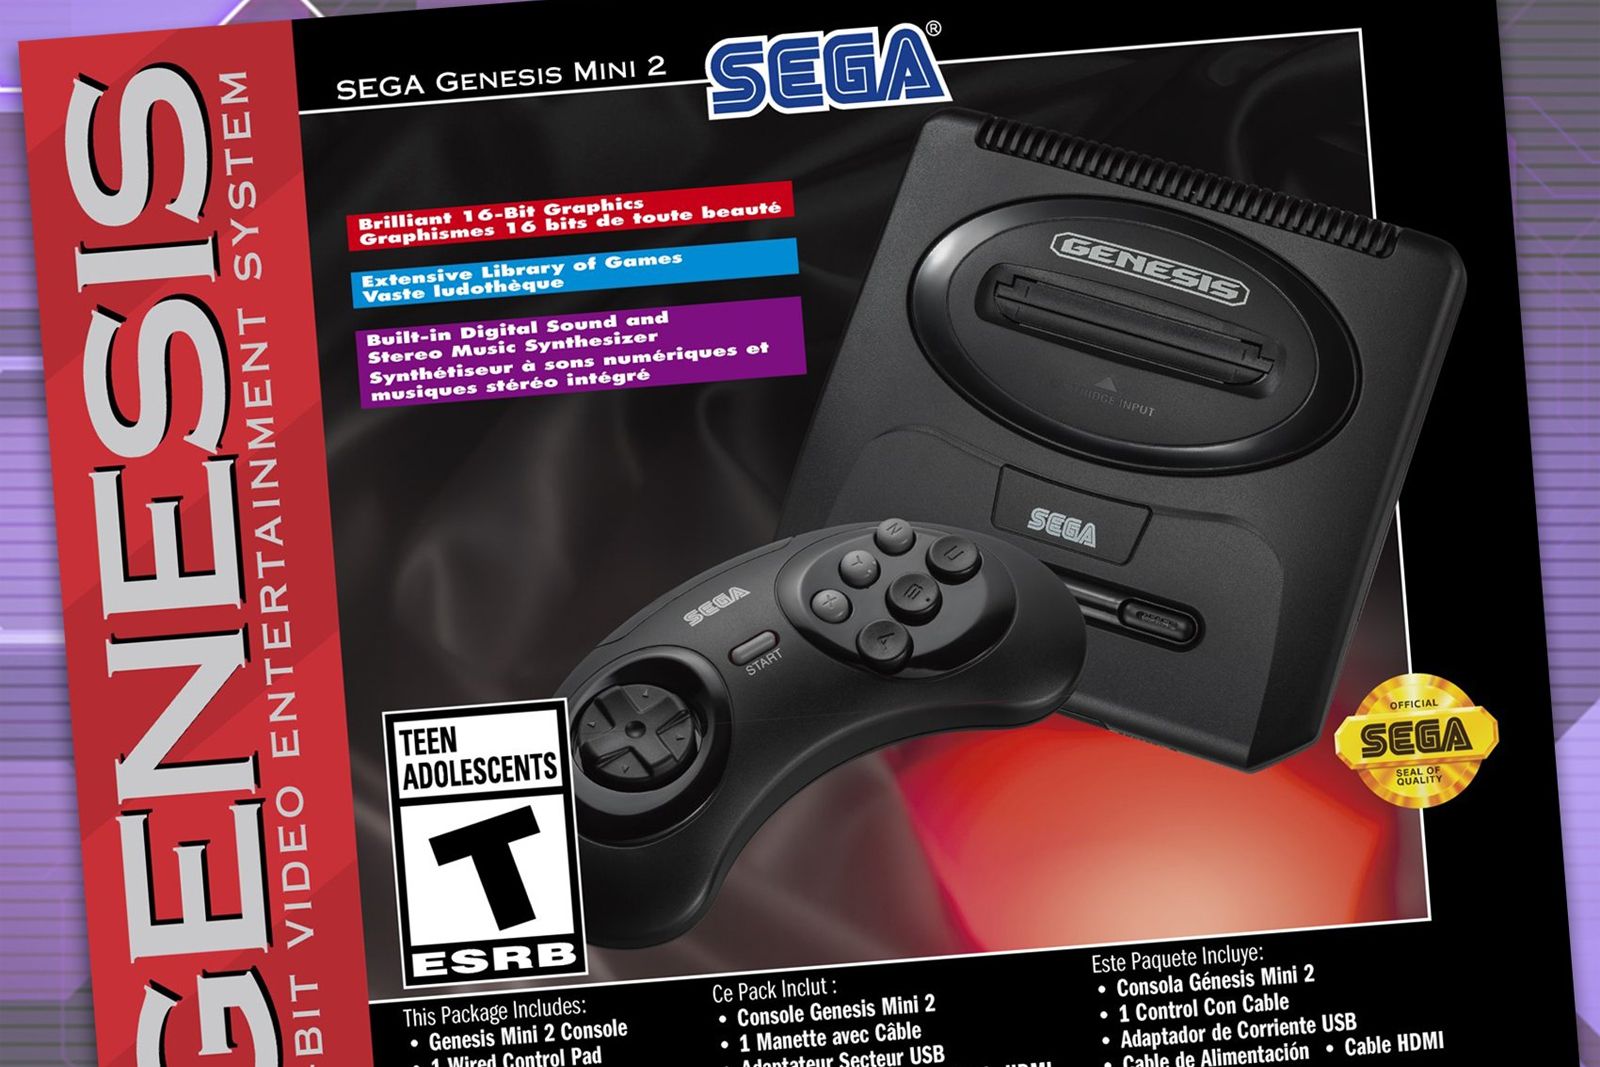 Sega Genesis Mini 2 to launch in US in October photo 2